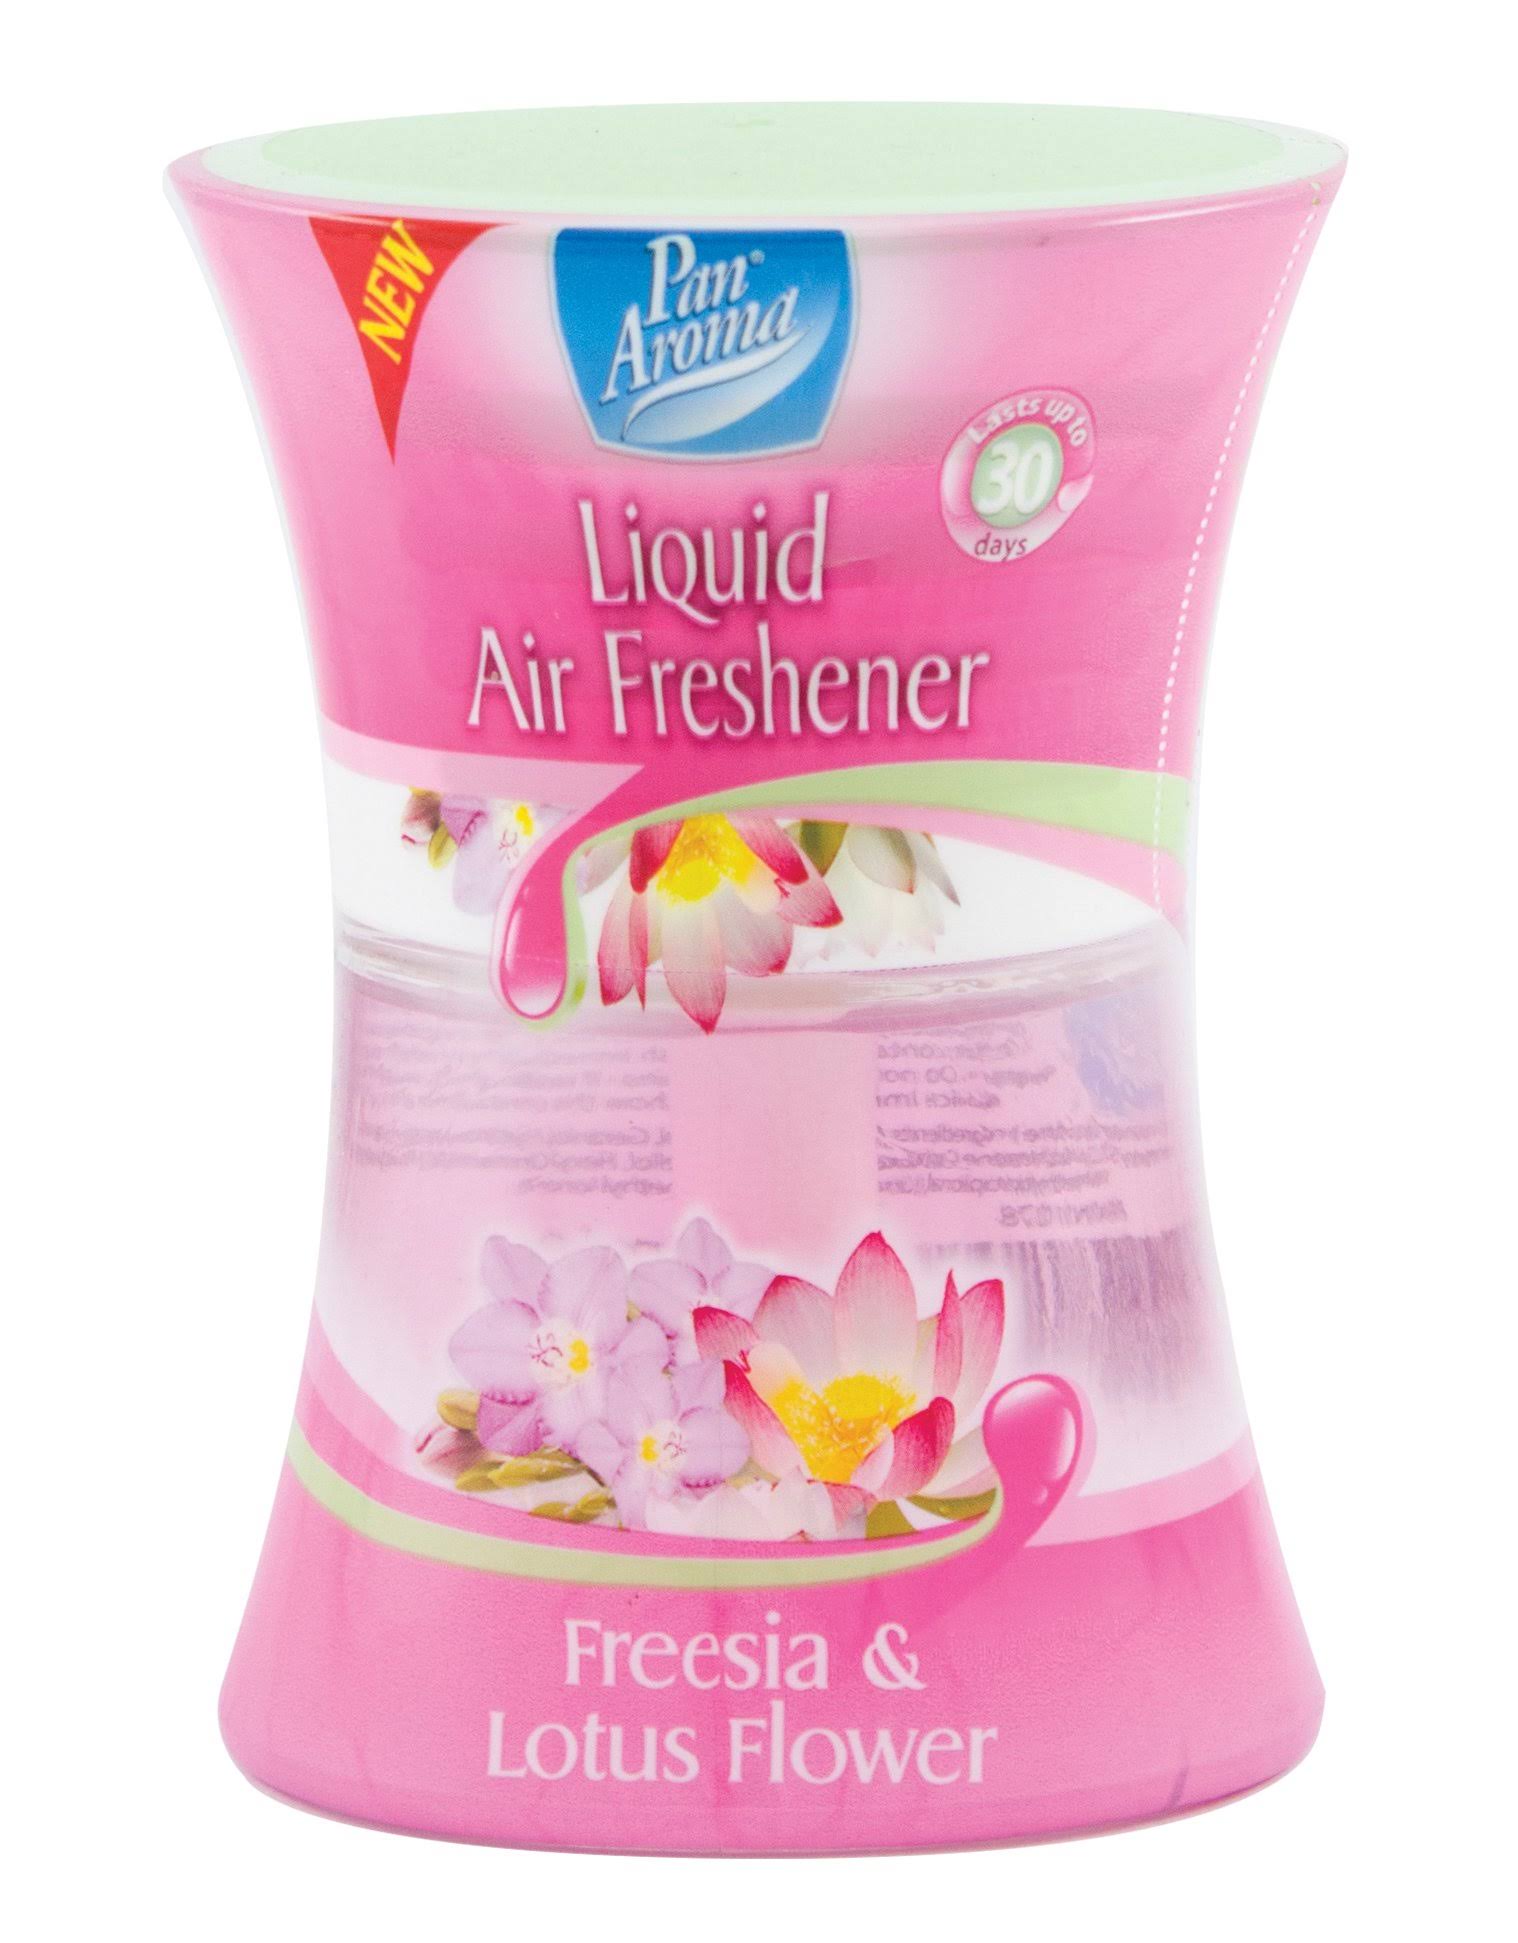 Pan Aroma Liquid Air Freshener - Freesia & Lotus Flower, 75ml